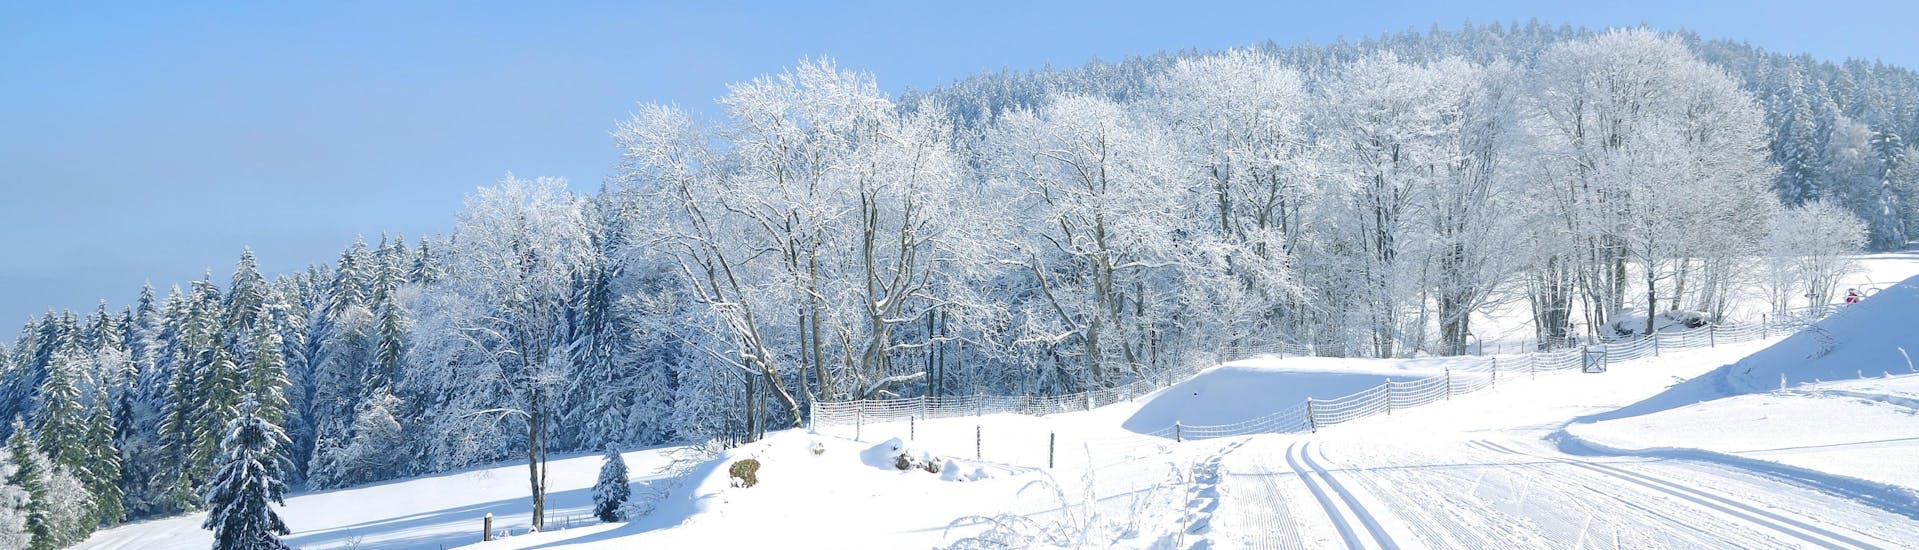 Imagen de las pistas de Mitterdorf (Almberg) - Mitterfirmiansreut donde se pueden reservar clases de esquí.